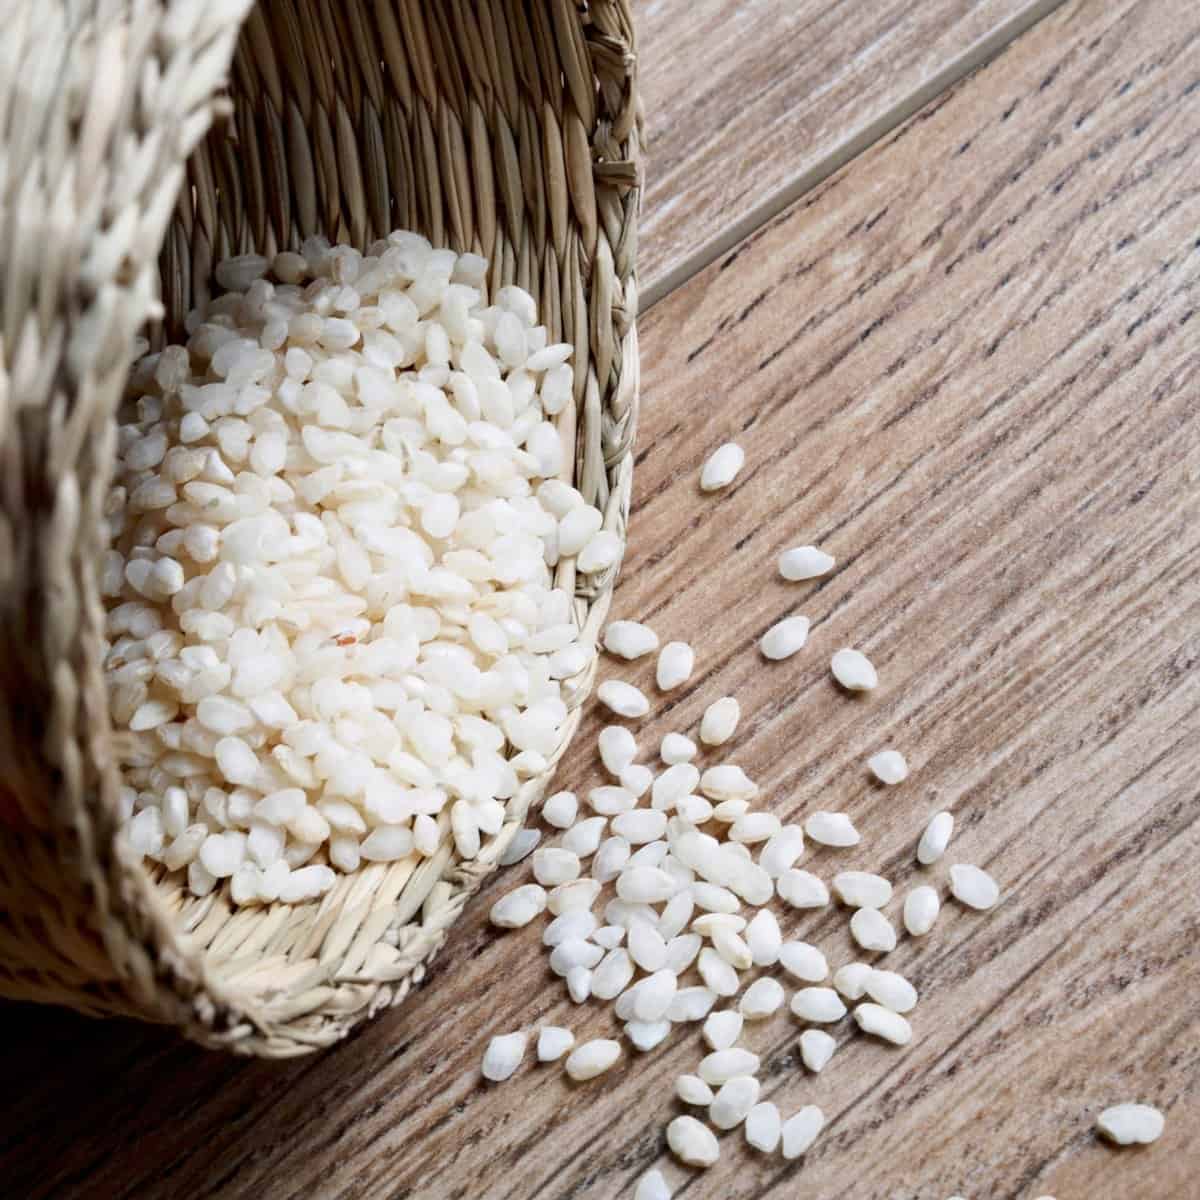 What is bomba rice